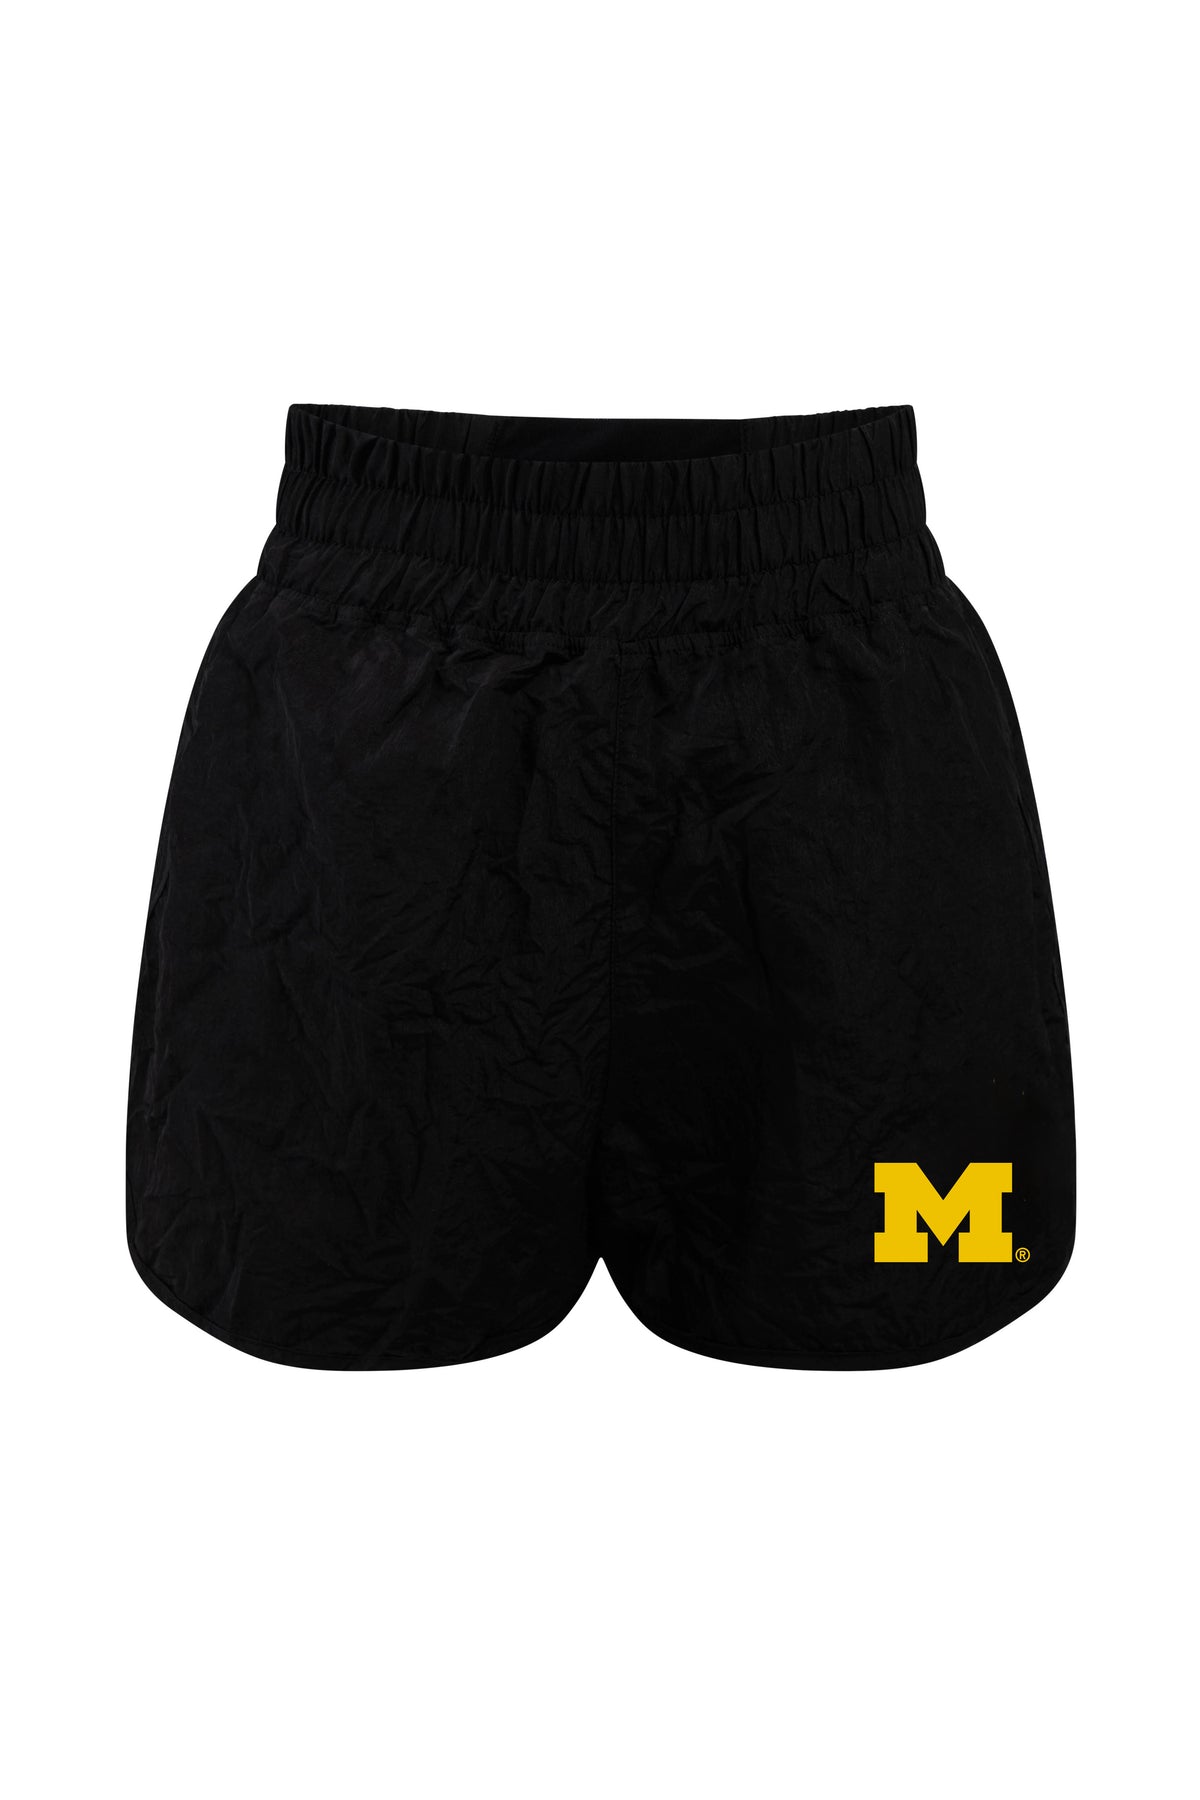 University of Michigan Boxer Short